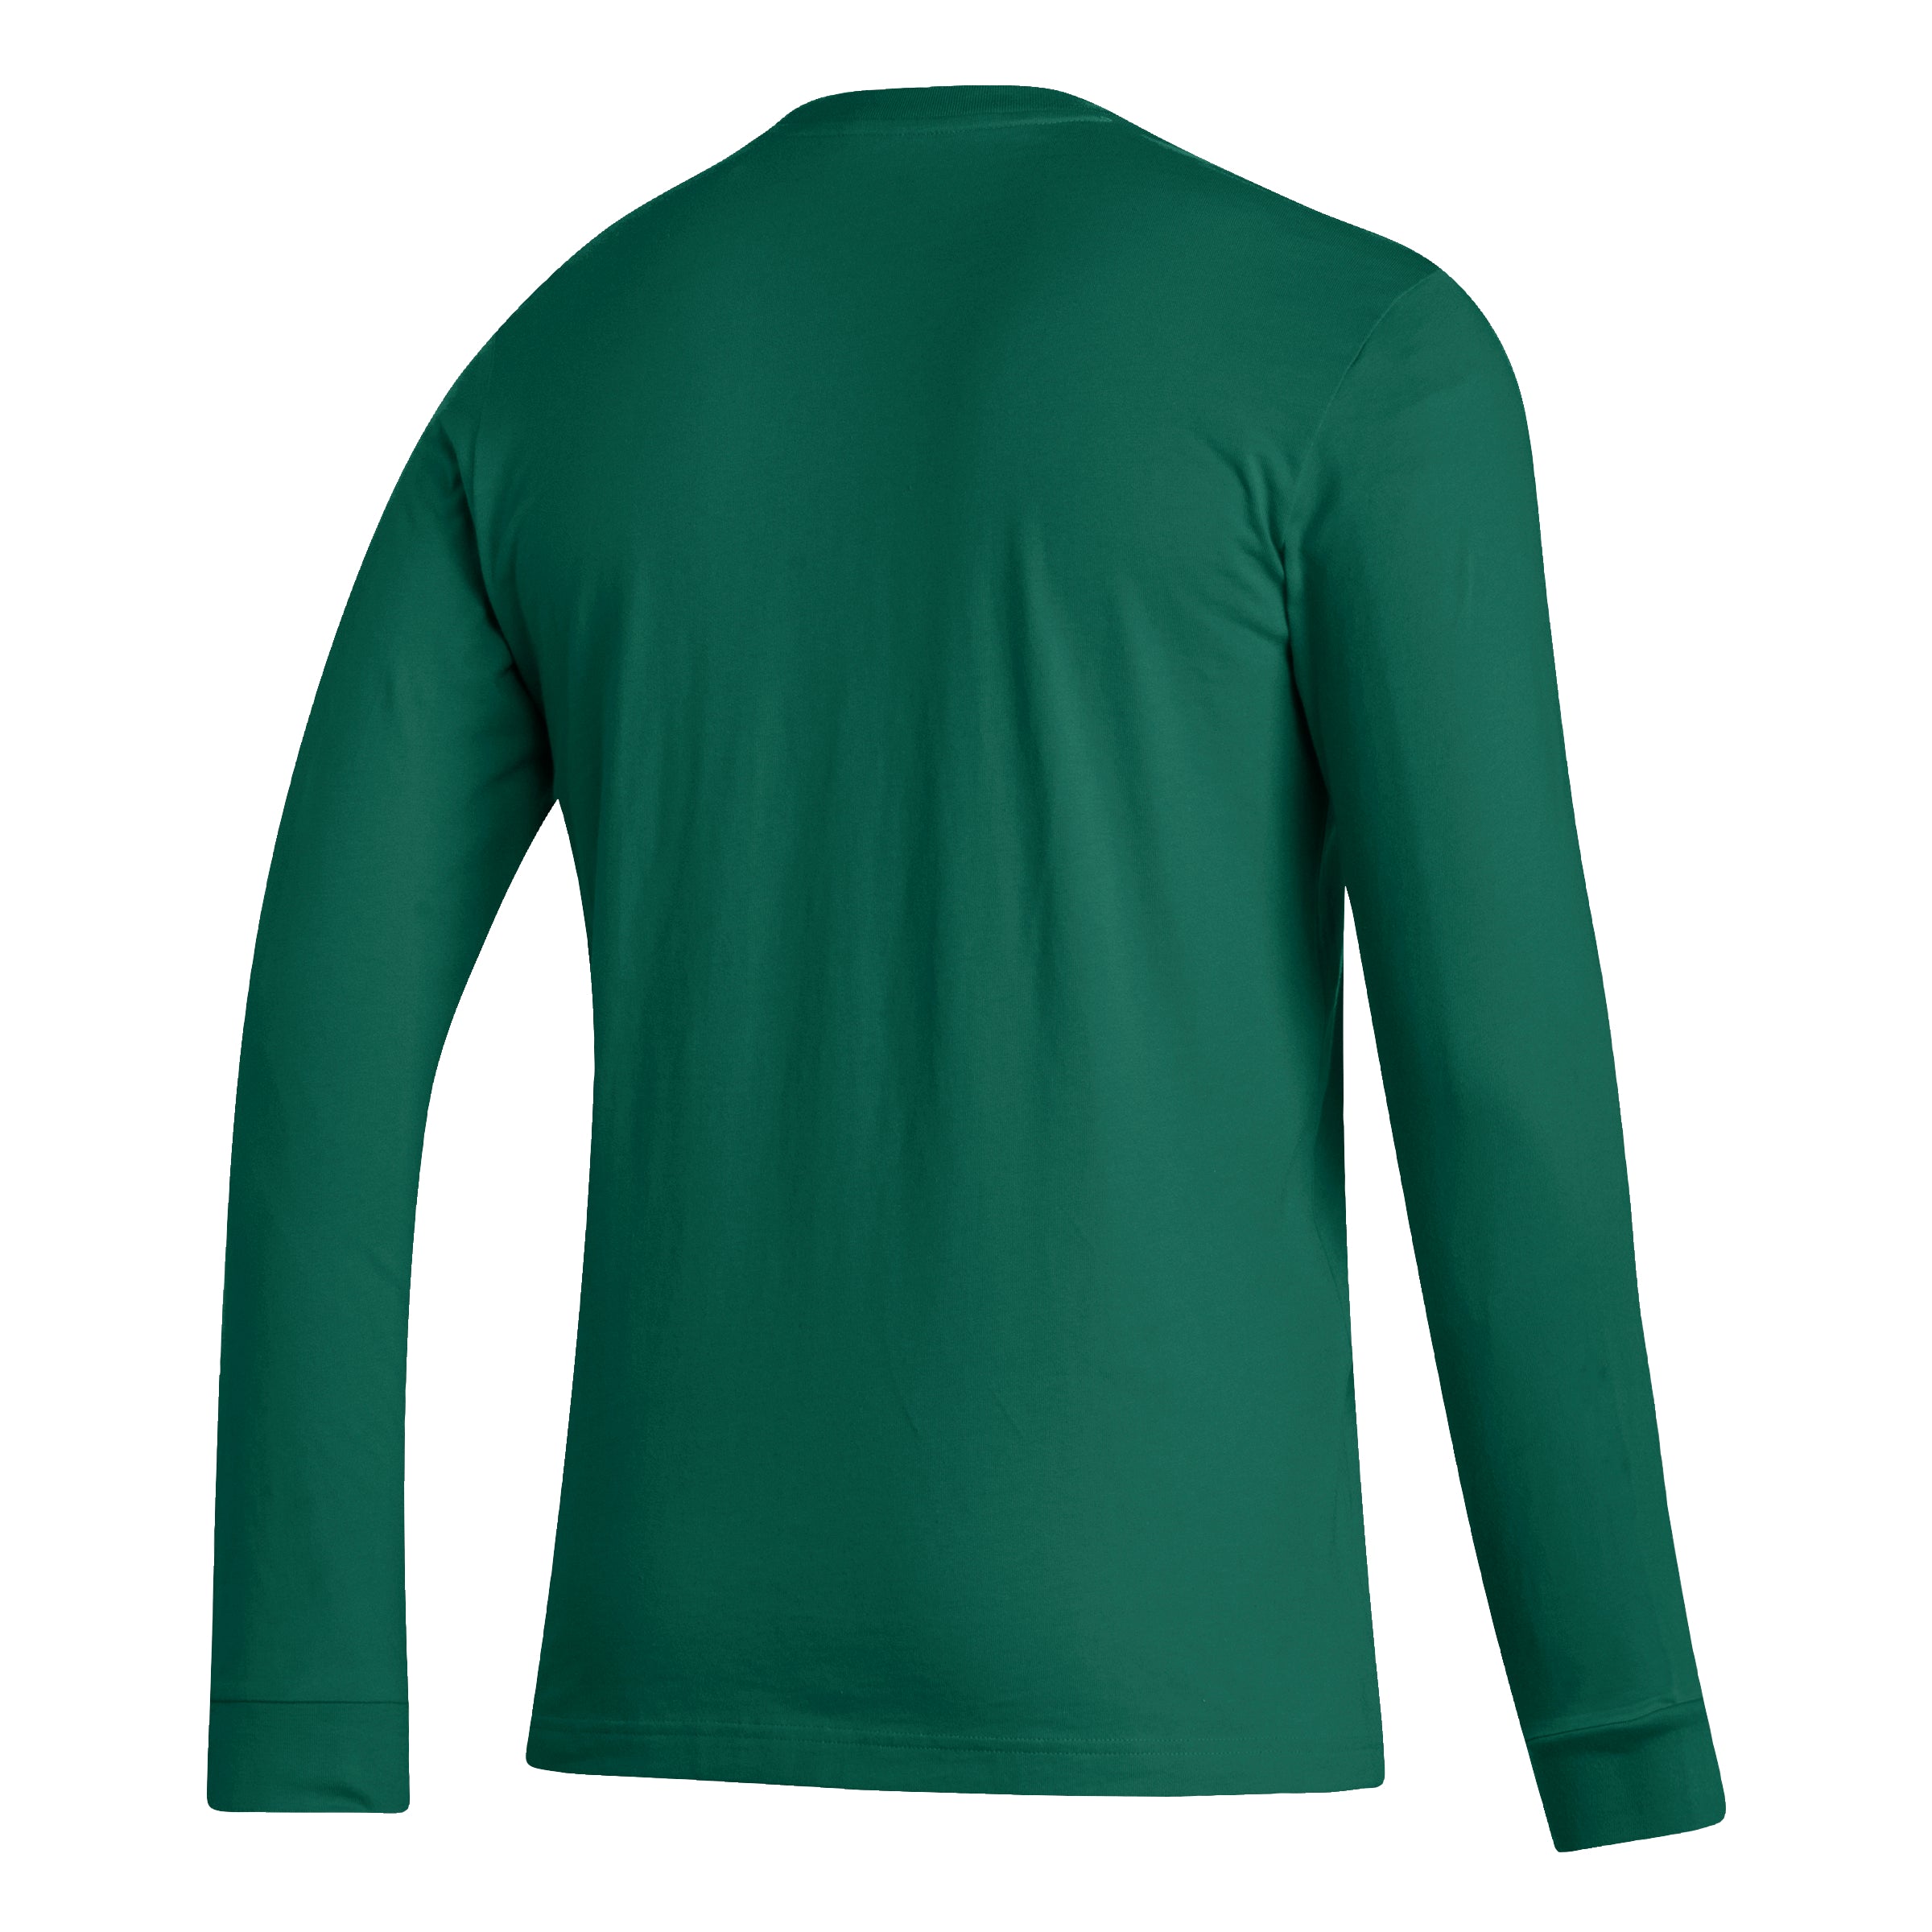 Miami Hurricanes adidas Locker Logo L/S Fresh T-Shirt - Green